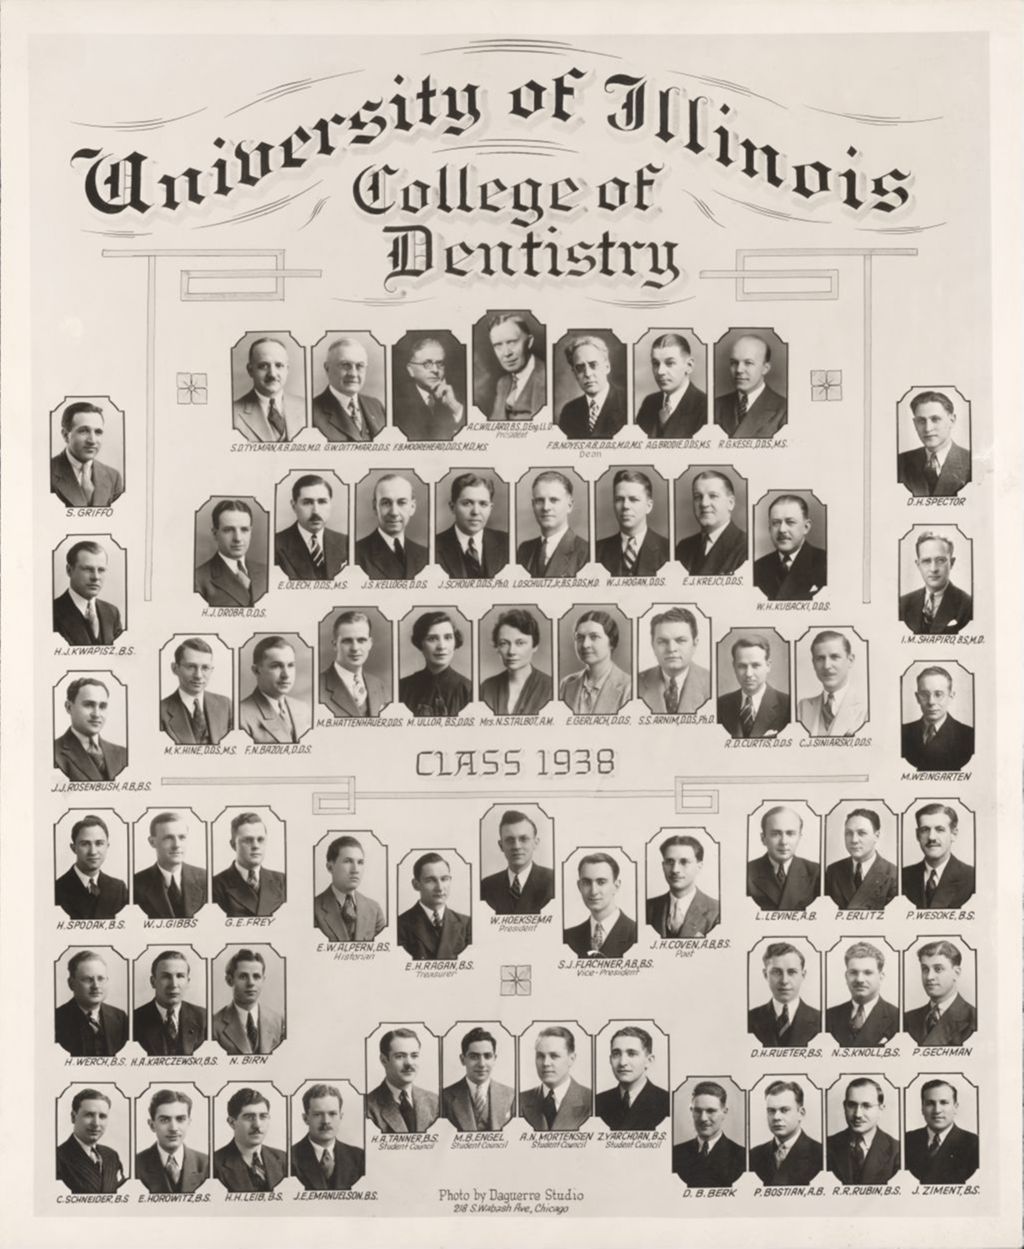 1938 graduating class, University of Illinois College of Dentistry